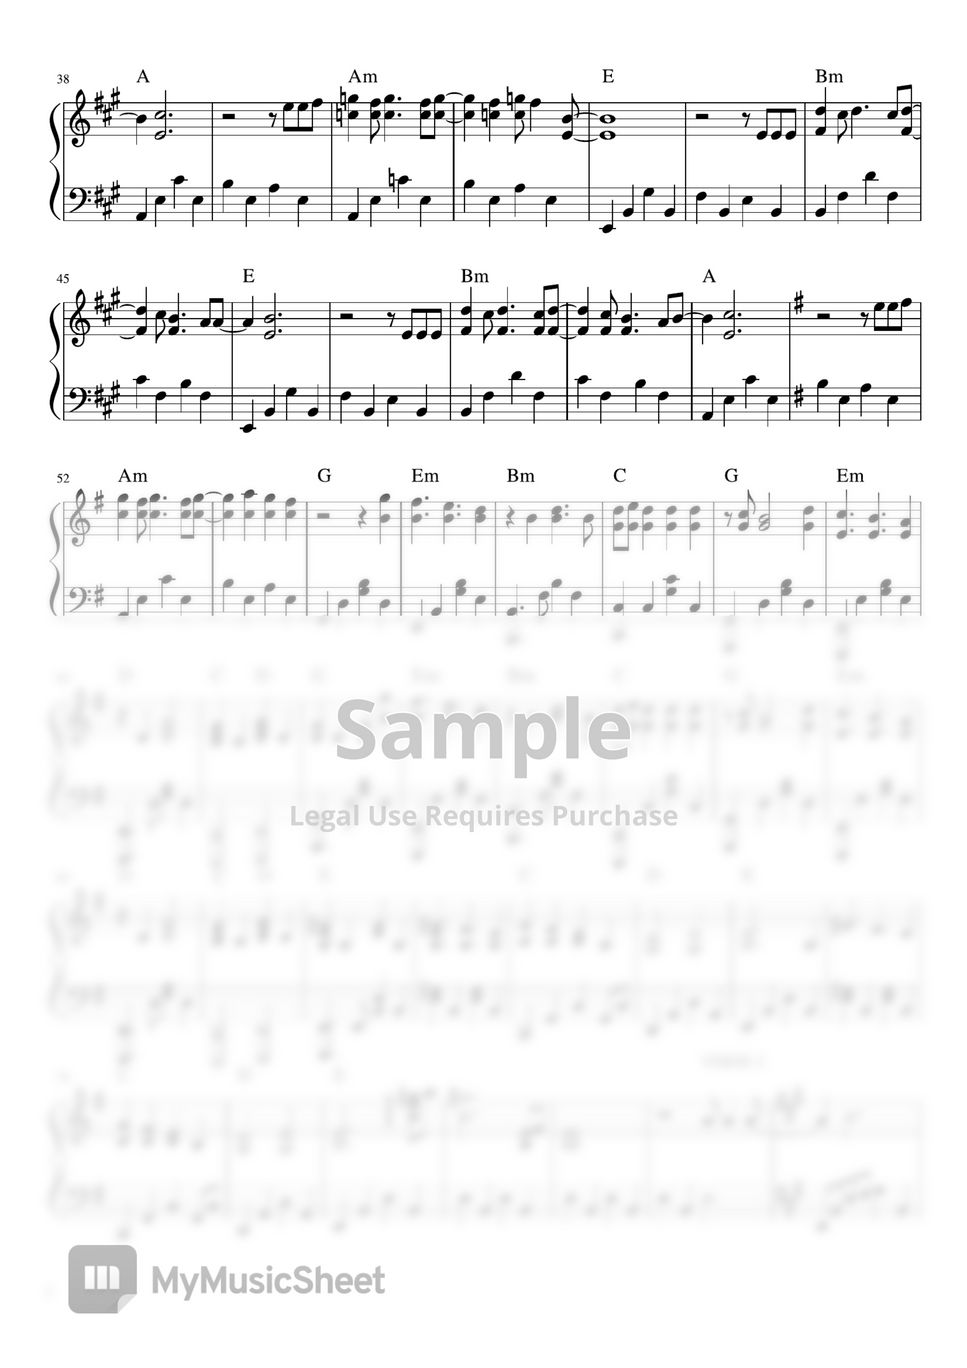 Rivermaya - 214 (piano sheet music) by Mel's Music Corner